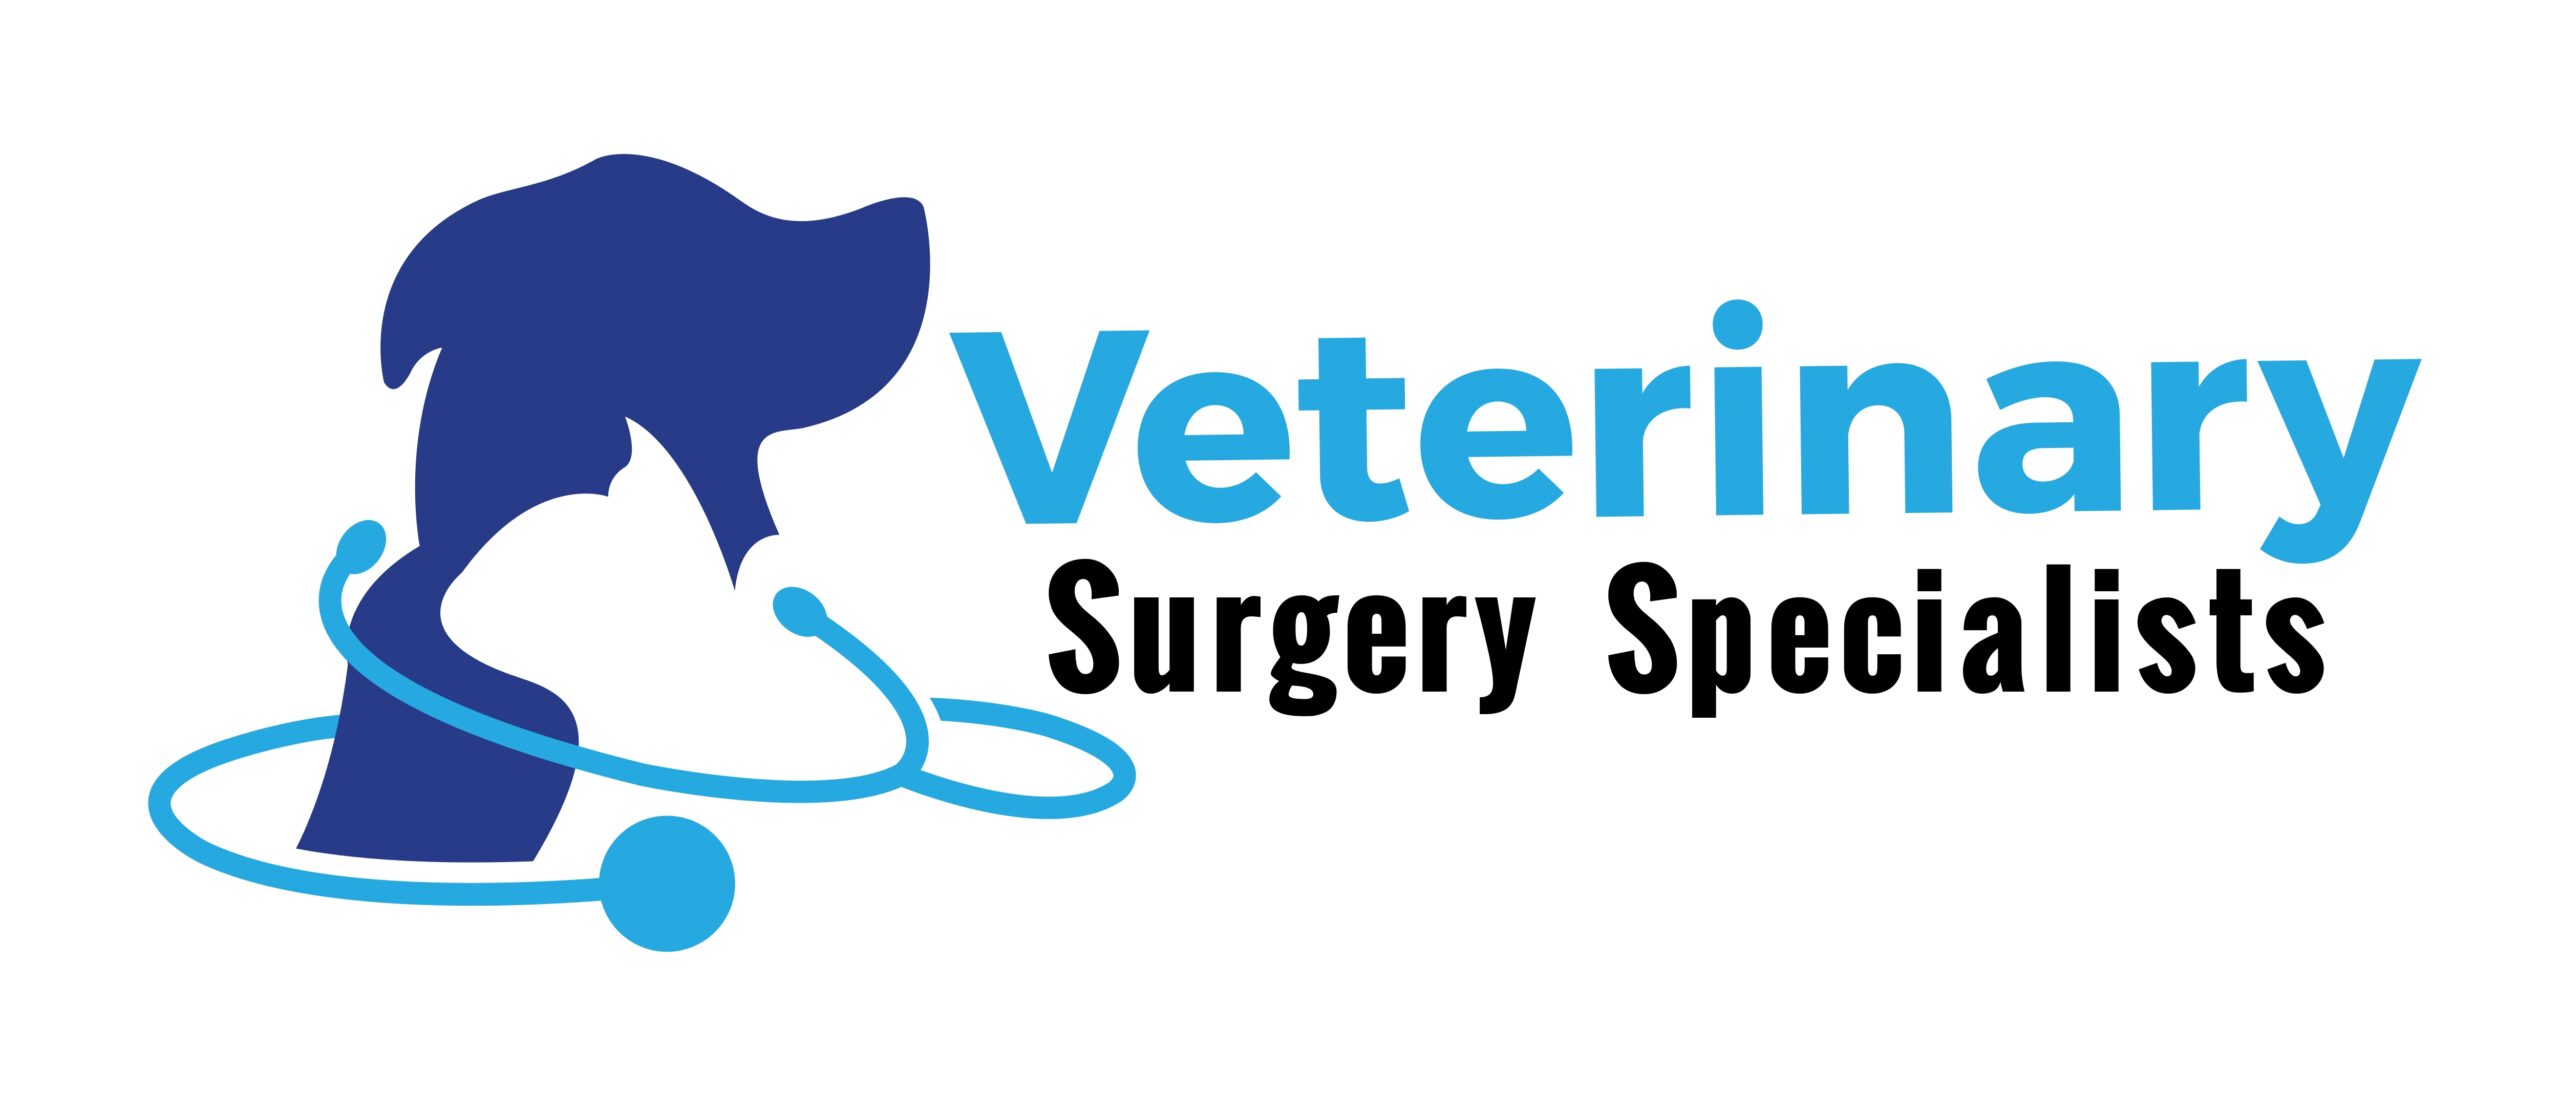 Veterinary Surgery Specialists